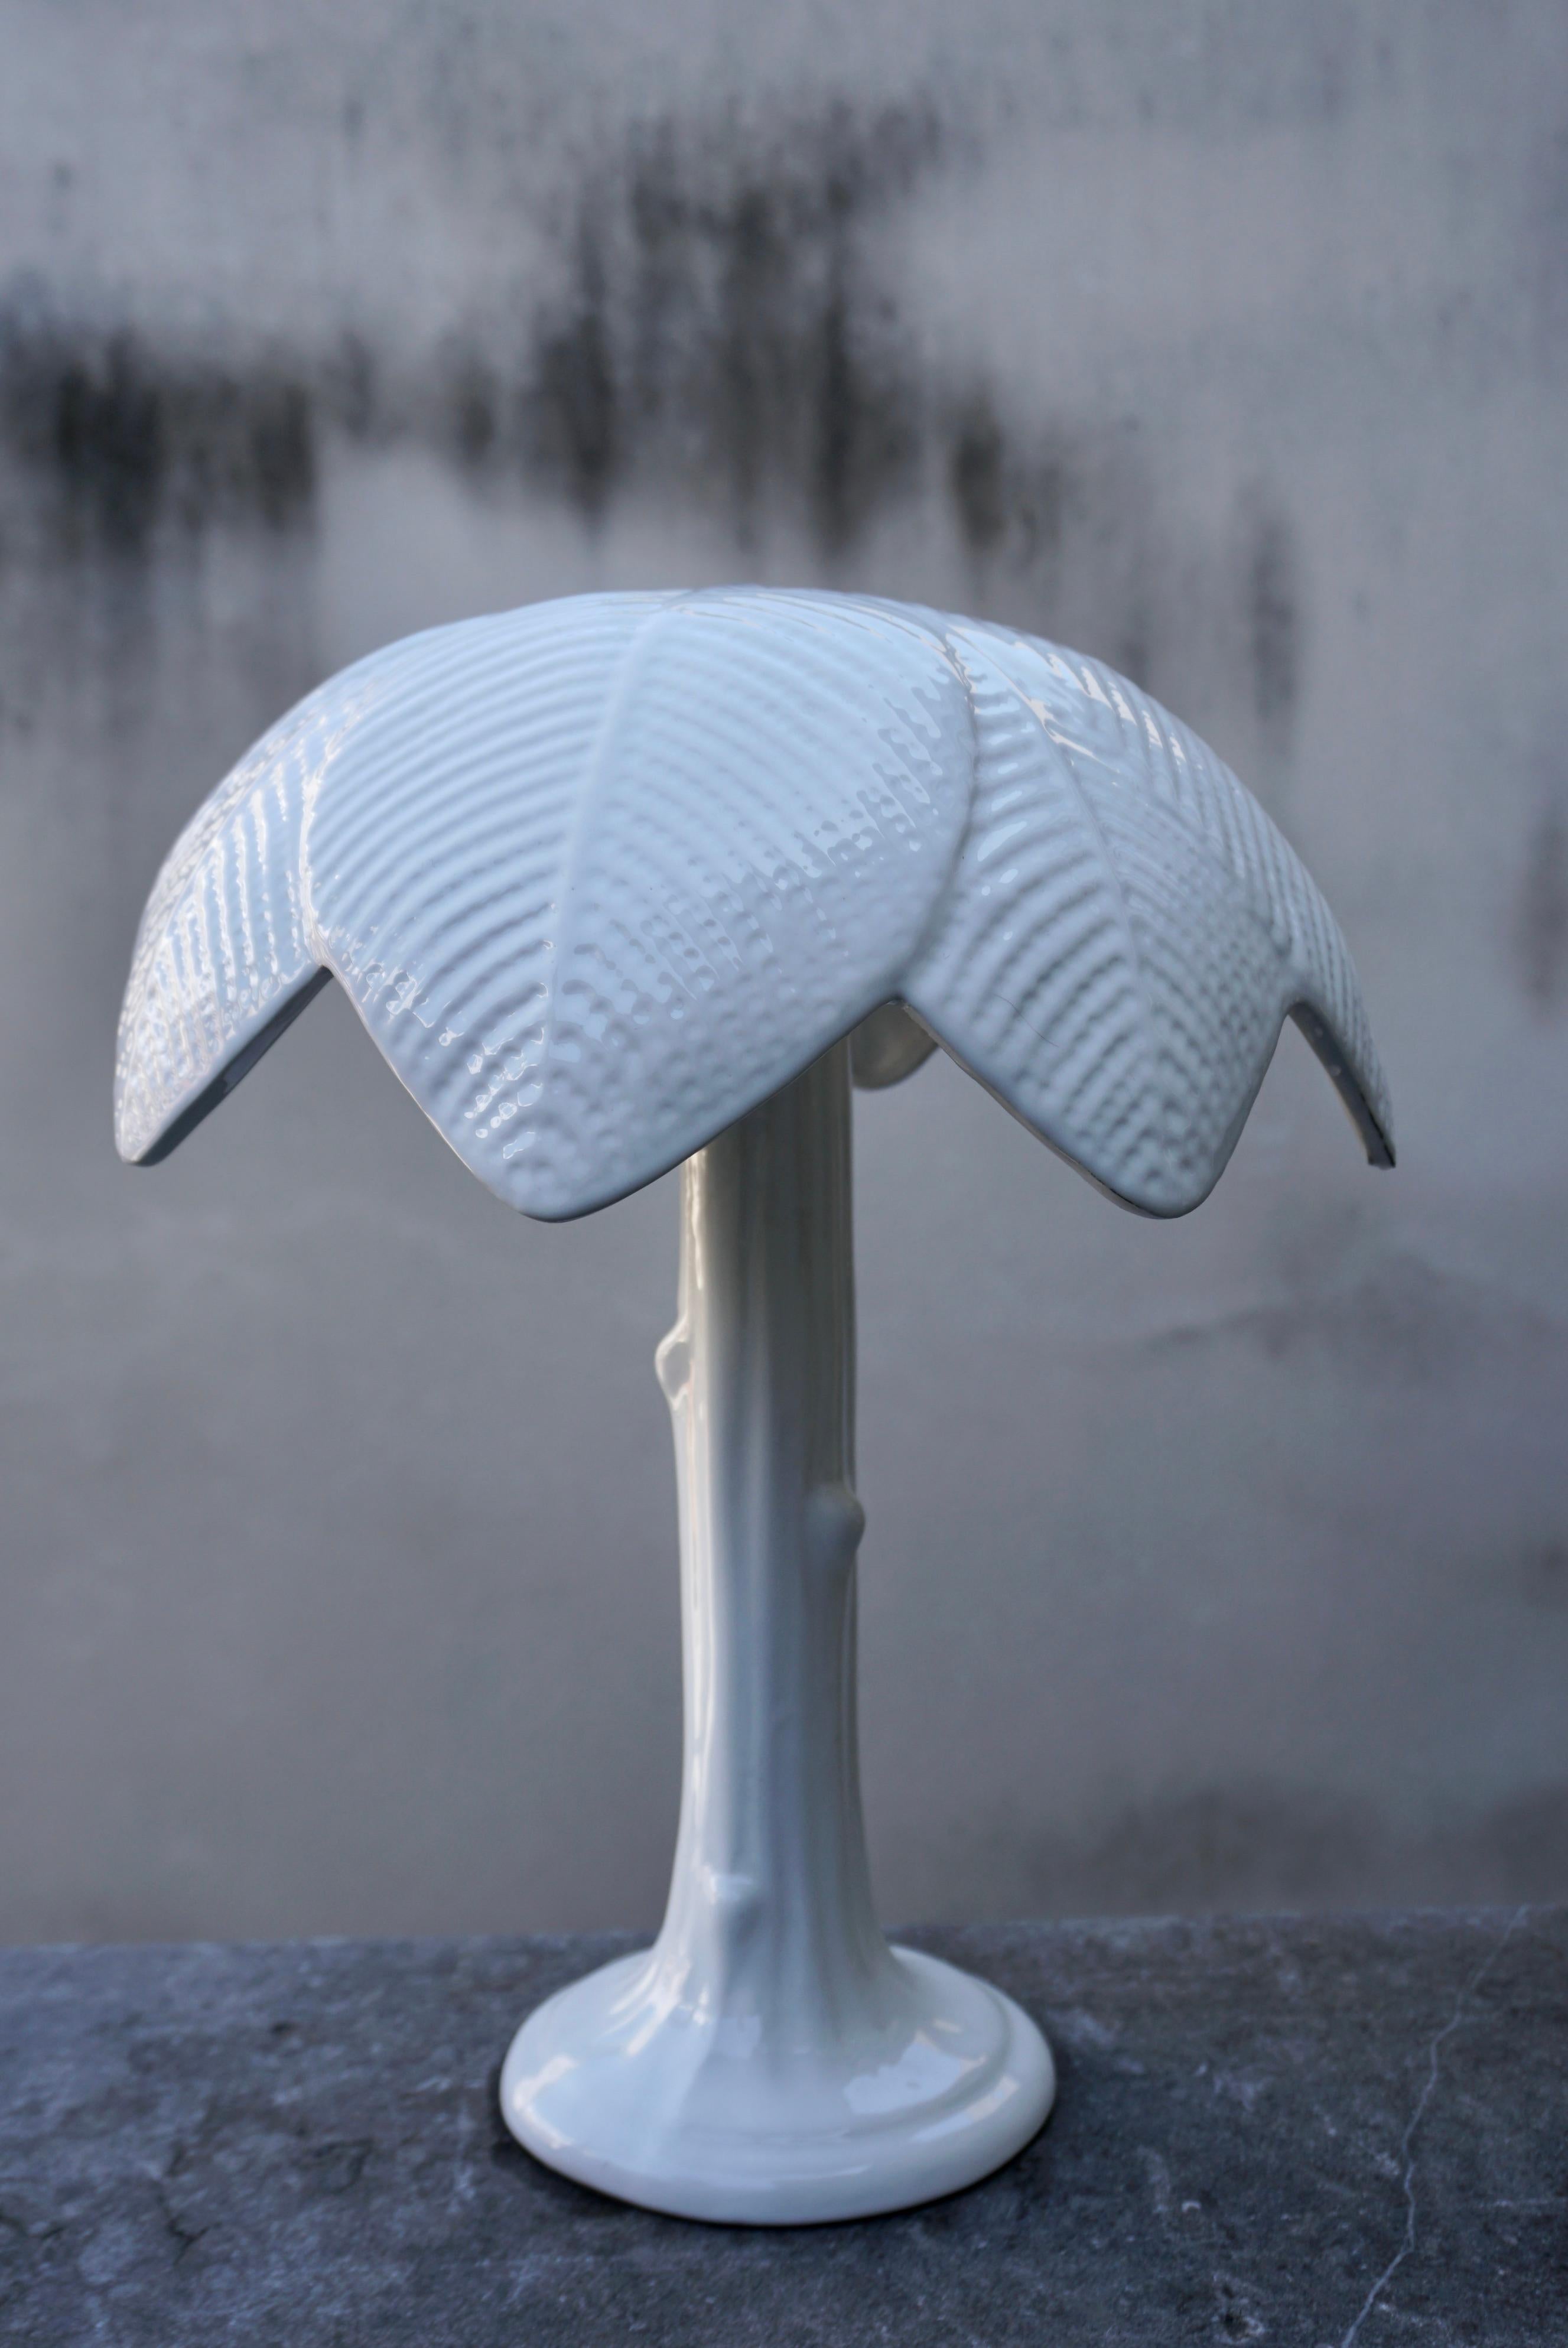 Original Tommaso Barbi table lamp made of a single piece of glazed white ceramic shaped like a palm tree.
Produced by B ceramics.

Diameter 13.7